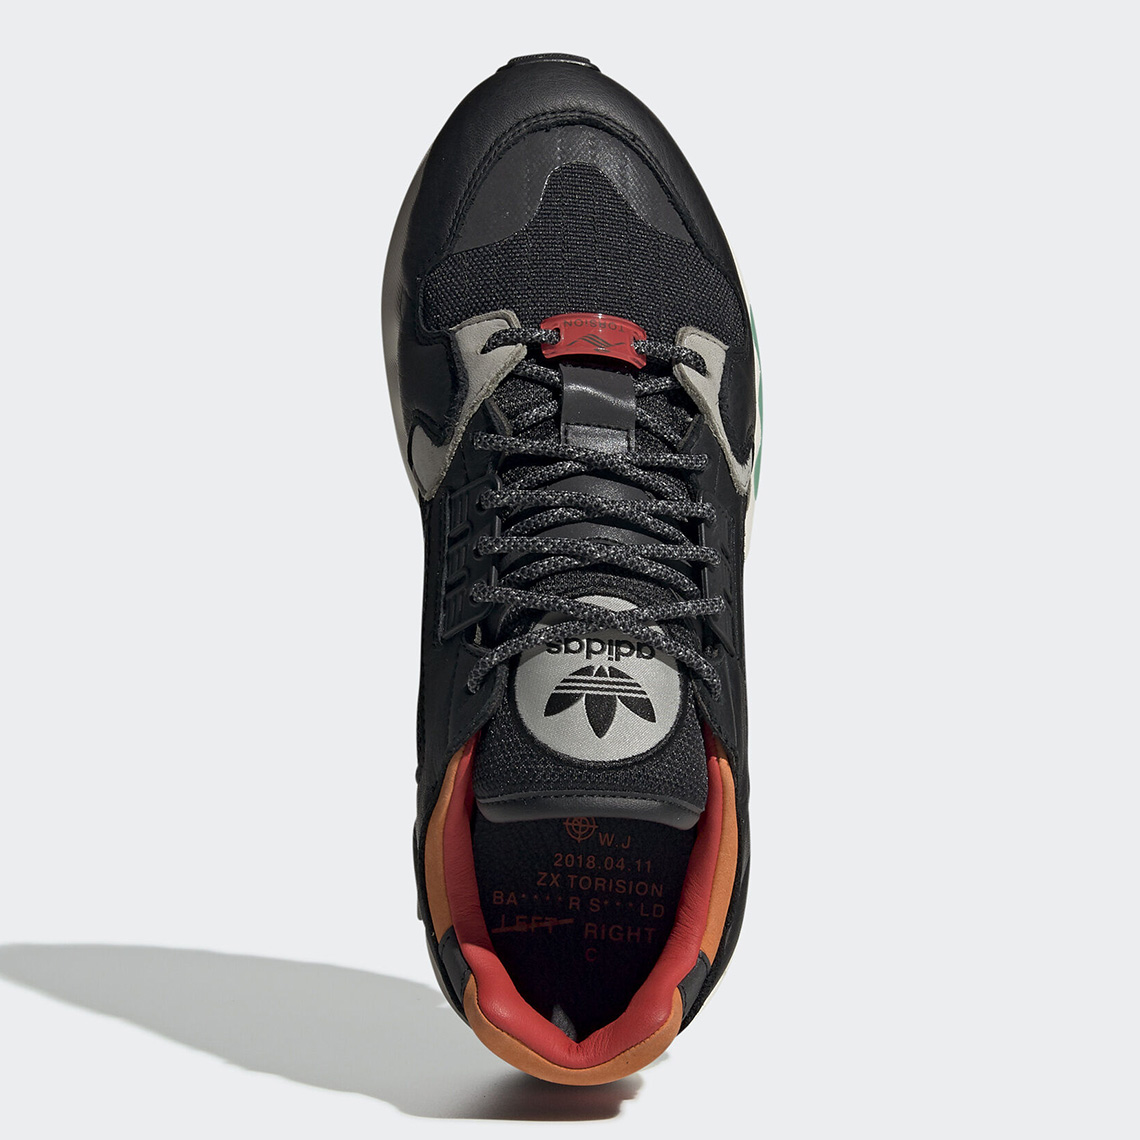 adidas ZX Torsion EE5553 Release Date | SneakerNews.com